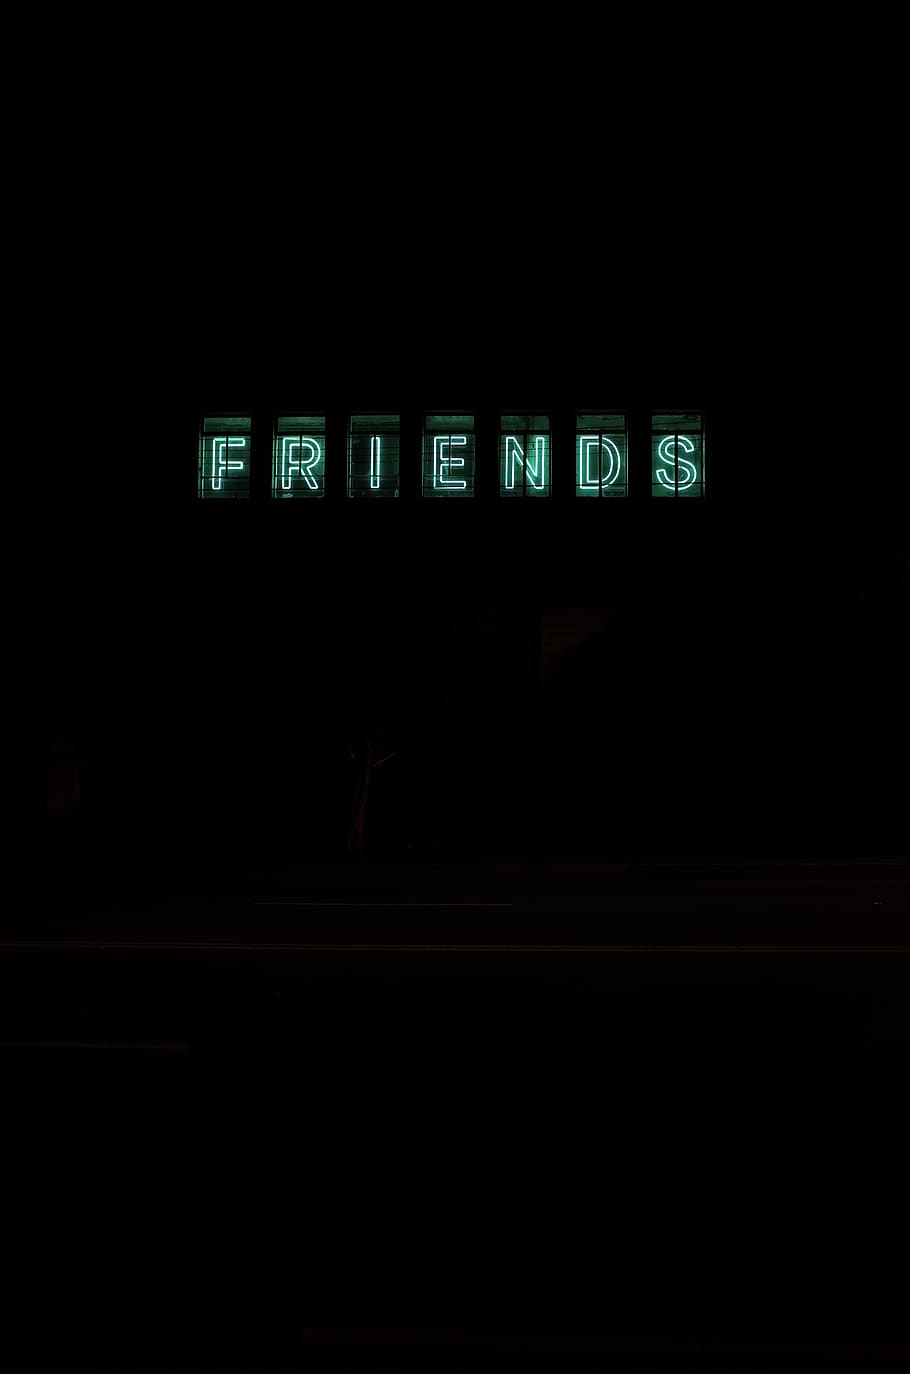 HD wallpaper: Green Friends Text, black background, dark, design, evening, glow